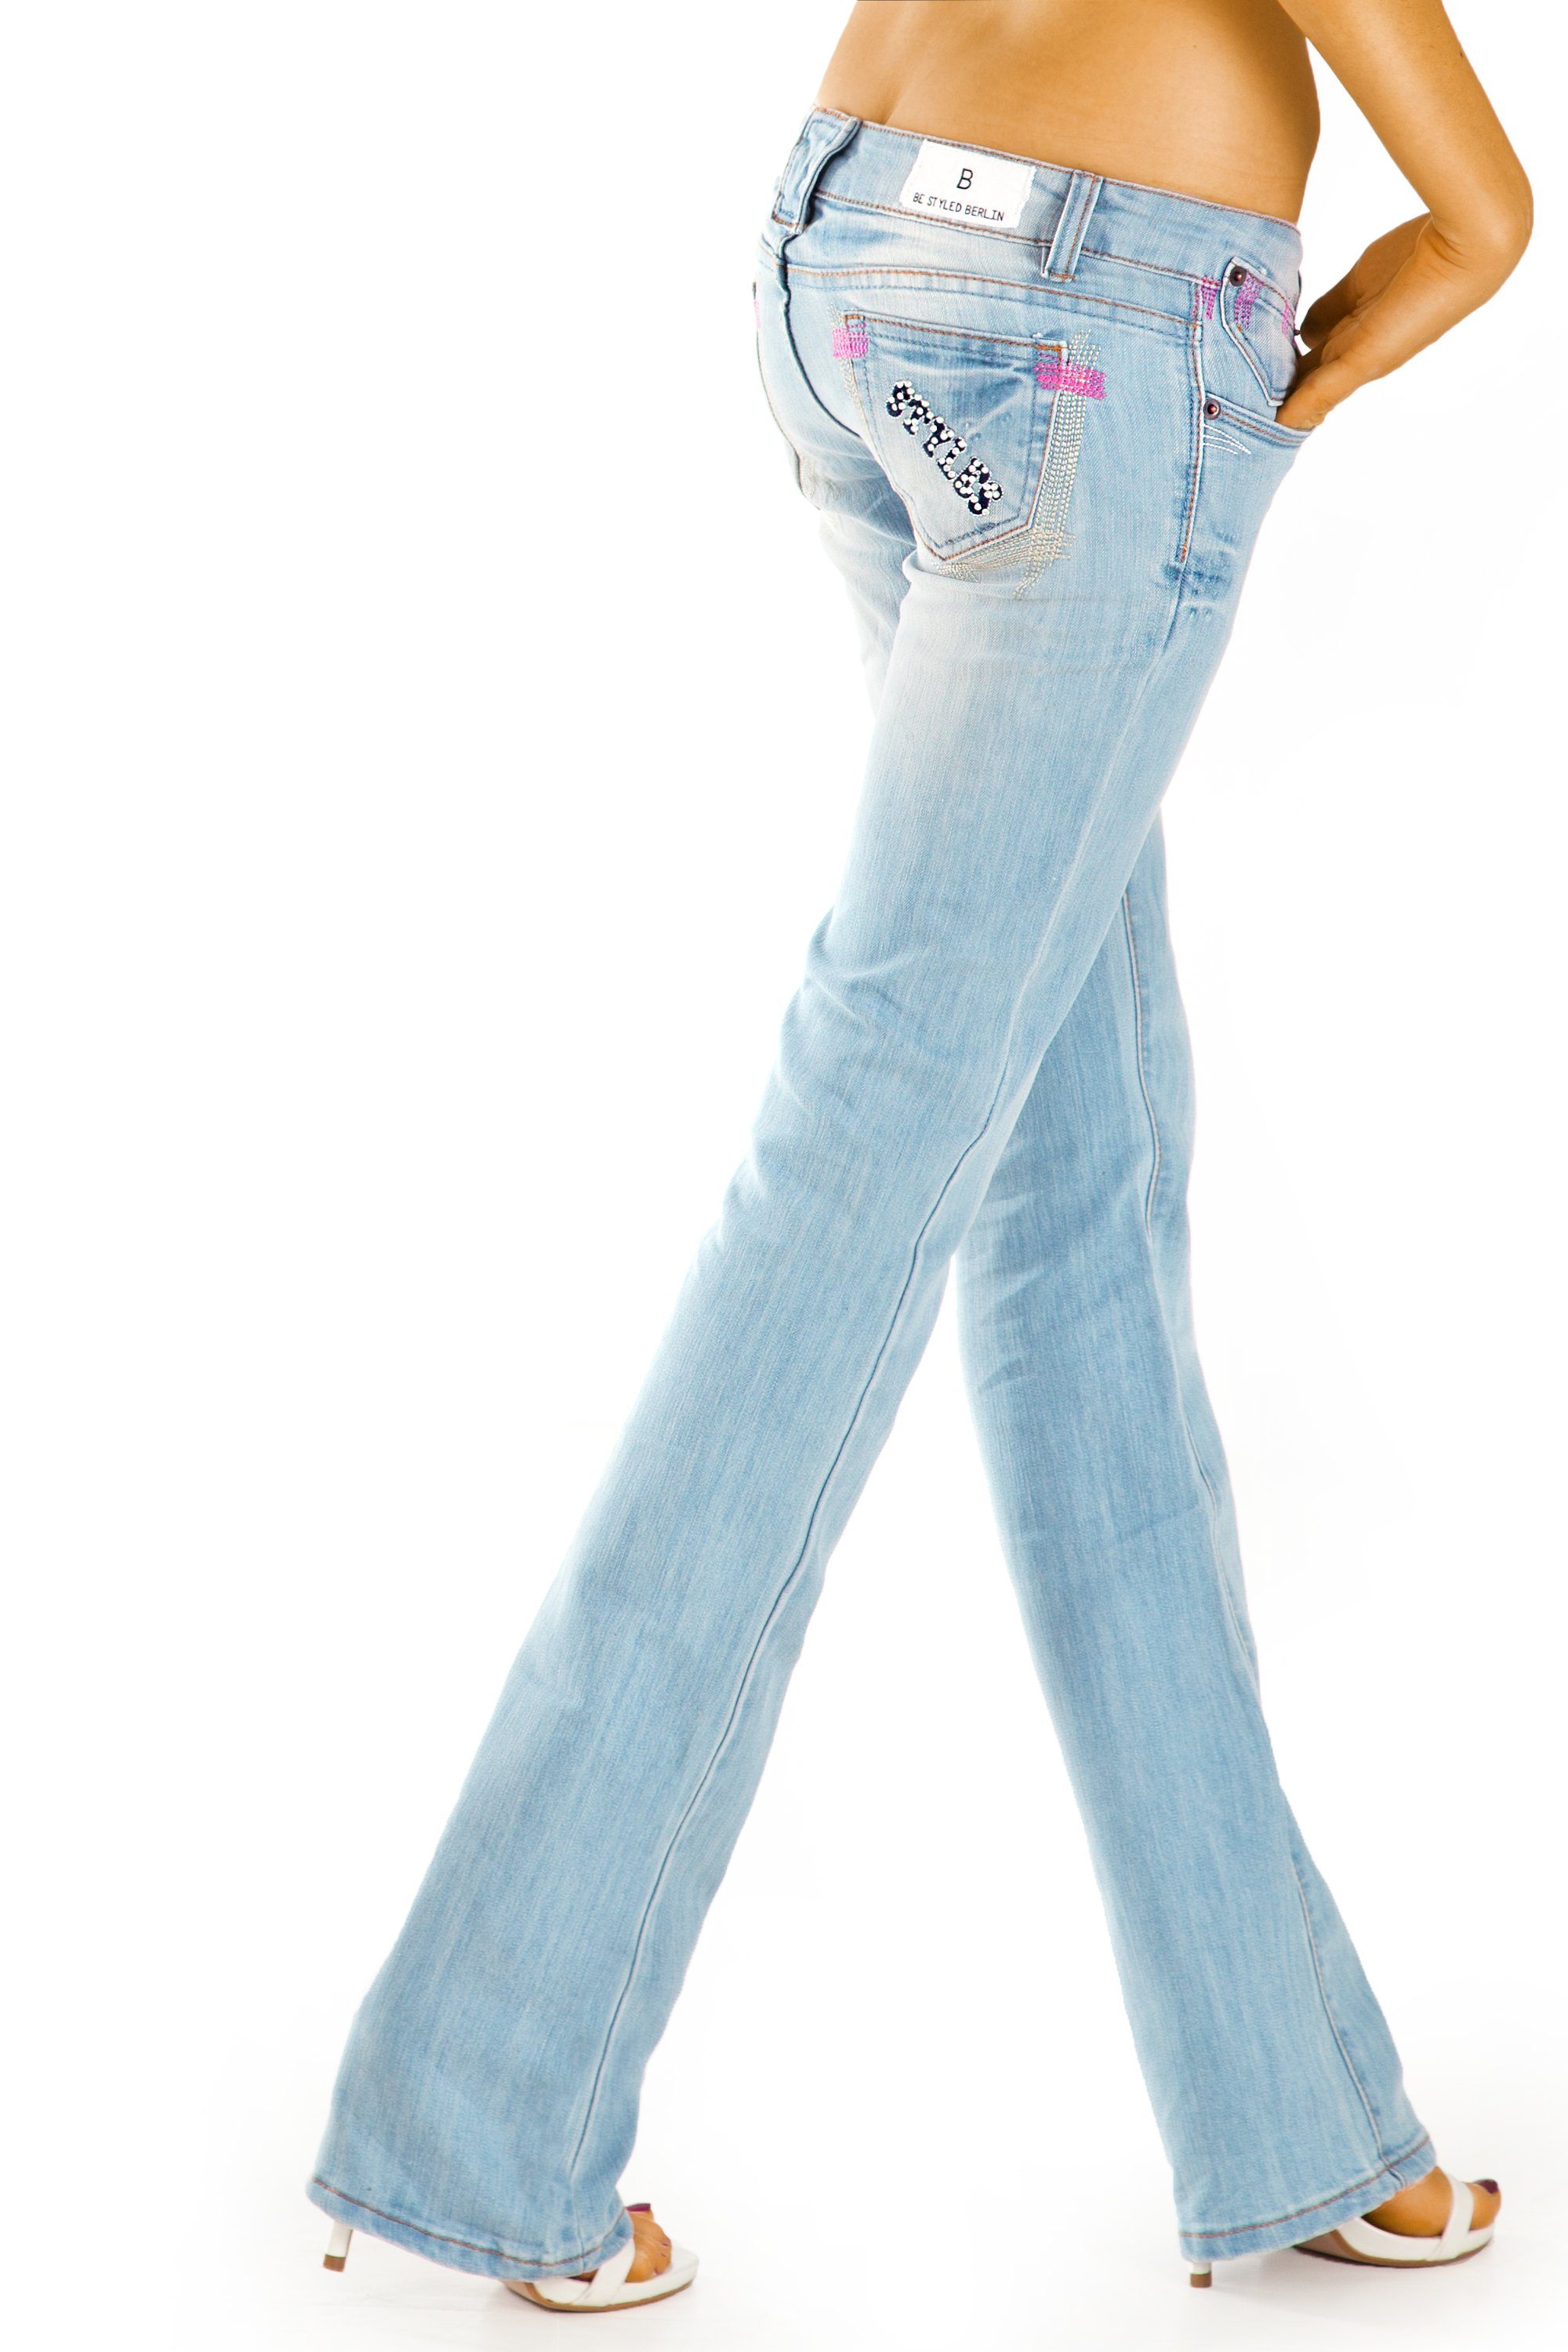 styled tiefer Bootcut-Jeans be Leibhöhe mit Stretch-Anteil, sehr Hüftjeans extrem - Damen - 5-pOcket-Style niedrige Jeanshose j37a-1 Bootcut Leibhöhe,